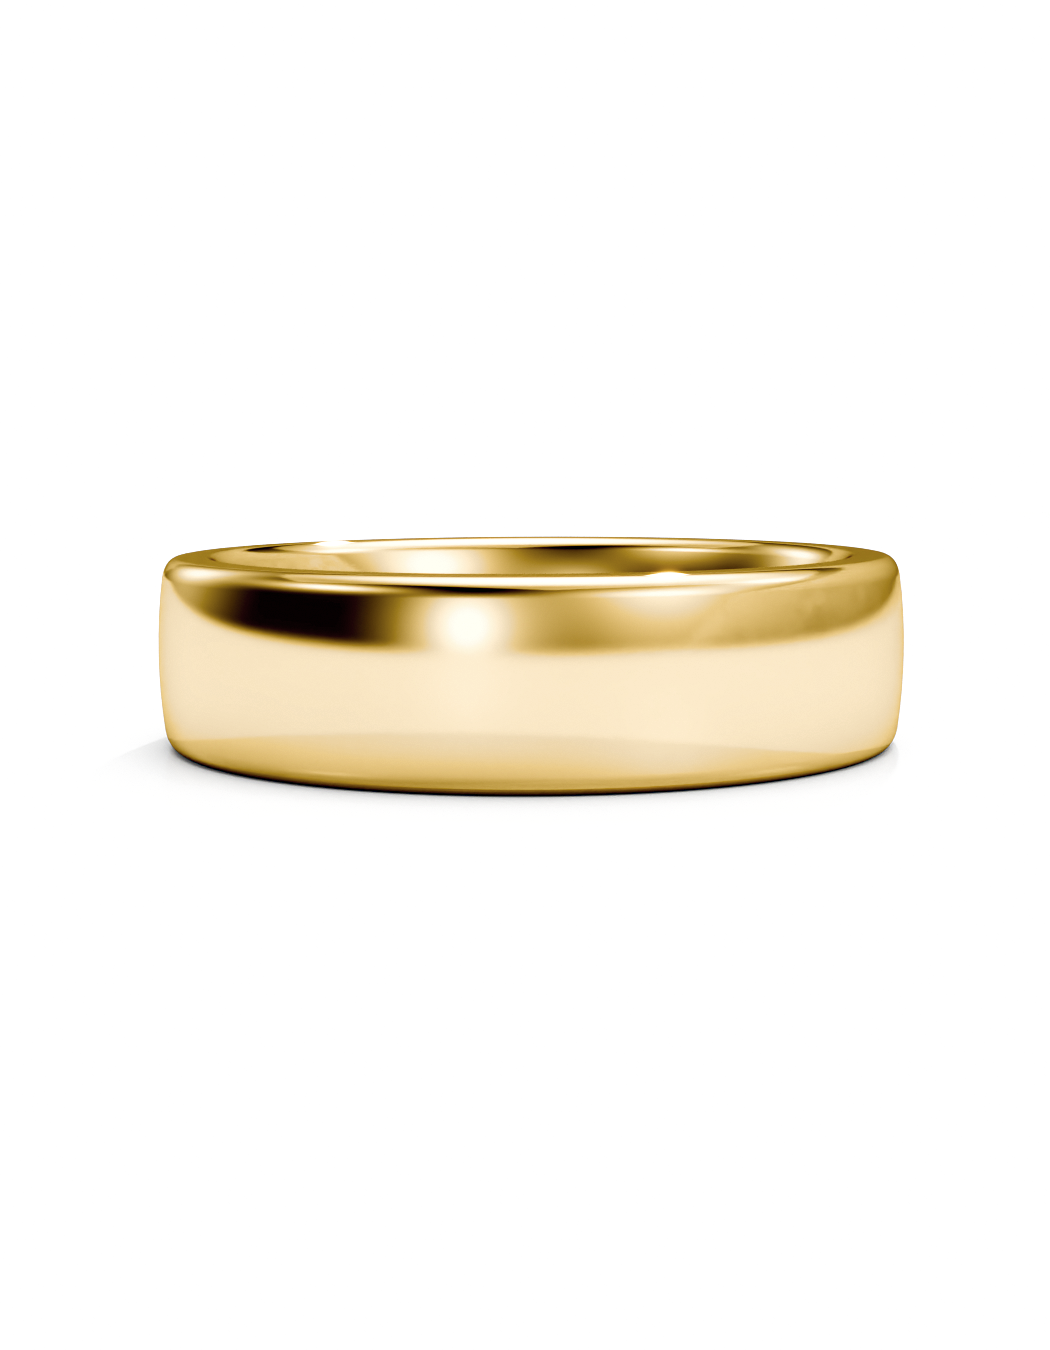 Bedrock Ring 14k / 18k Gold - 6mm